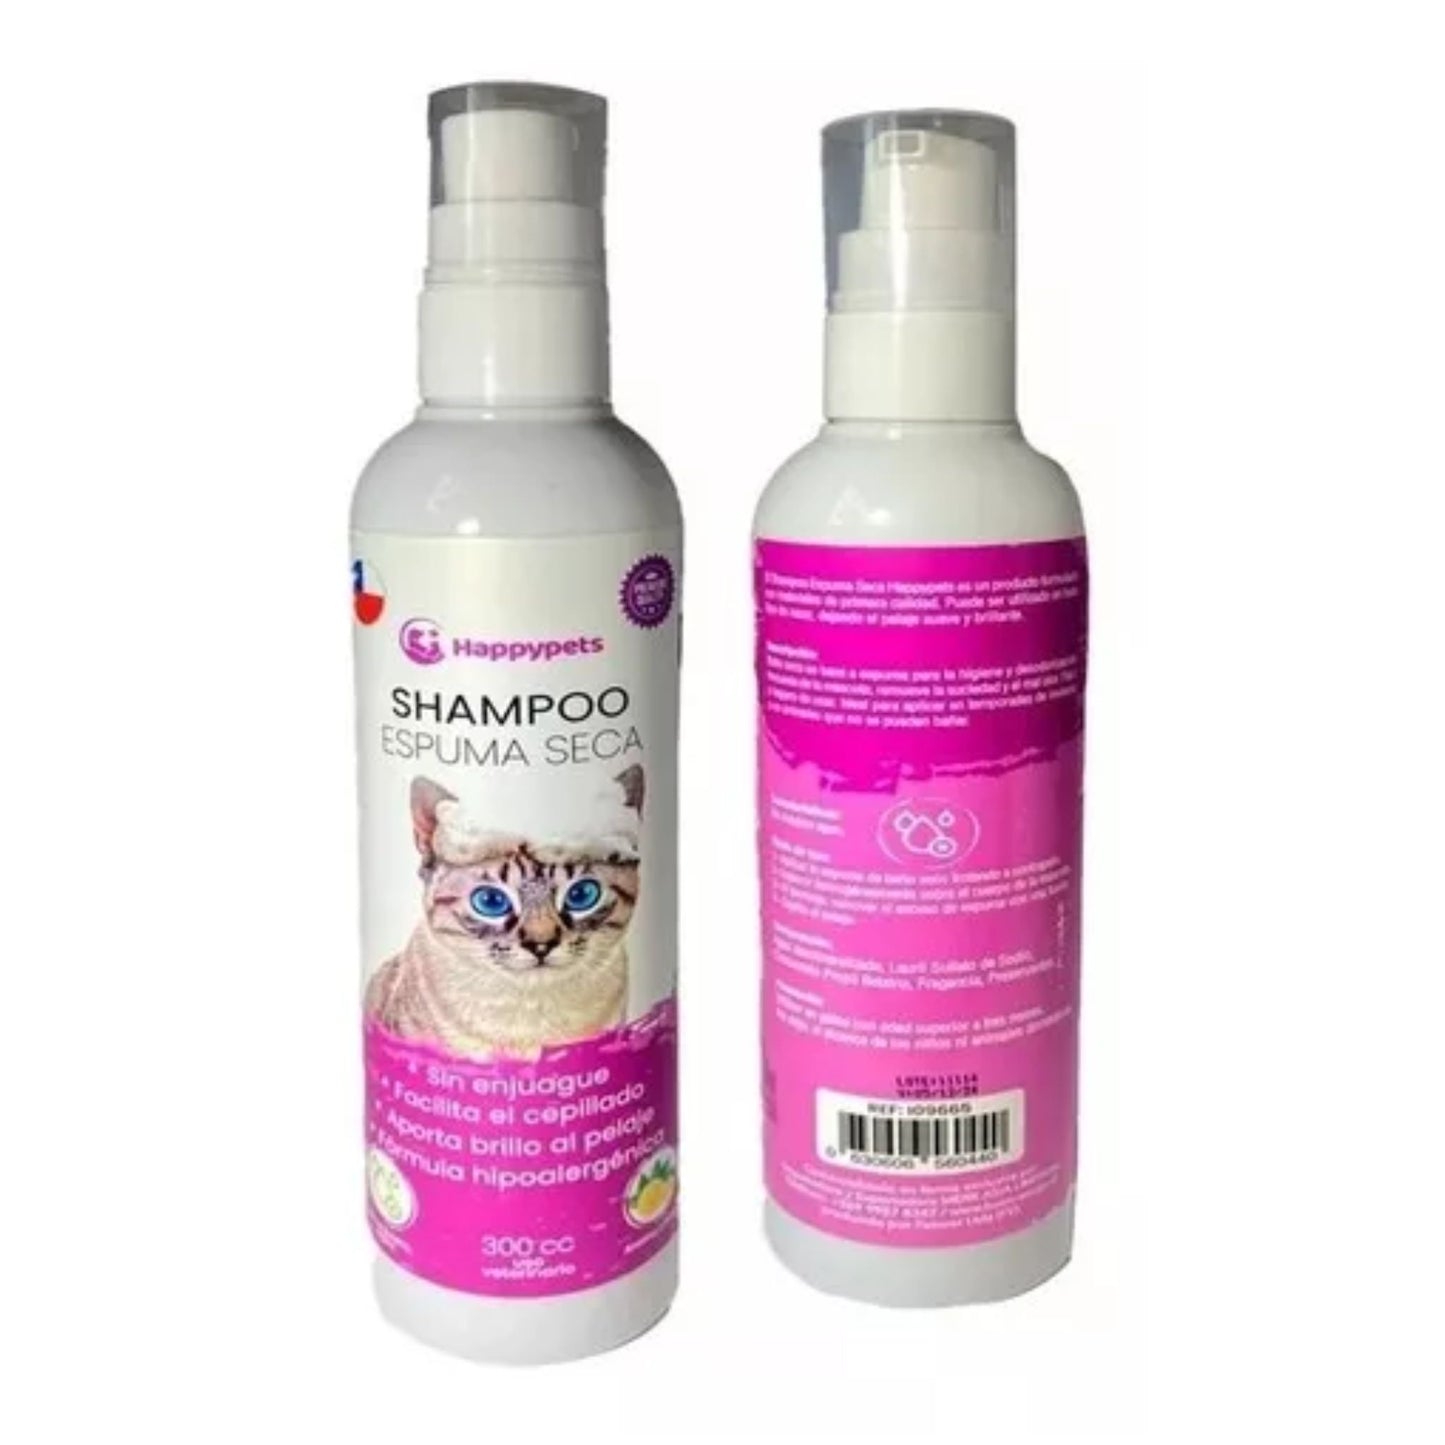 HappyPets Shampoo en Seco Espuma - Gato